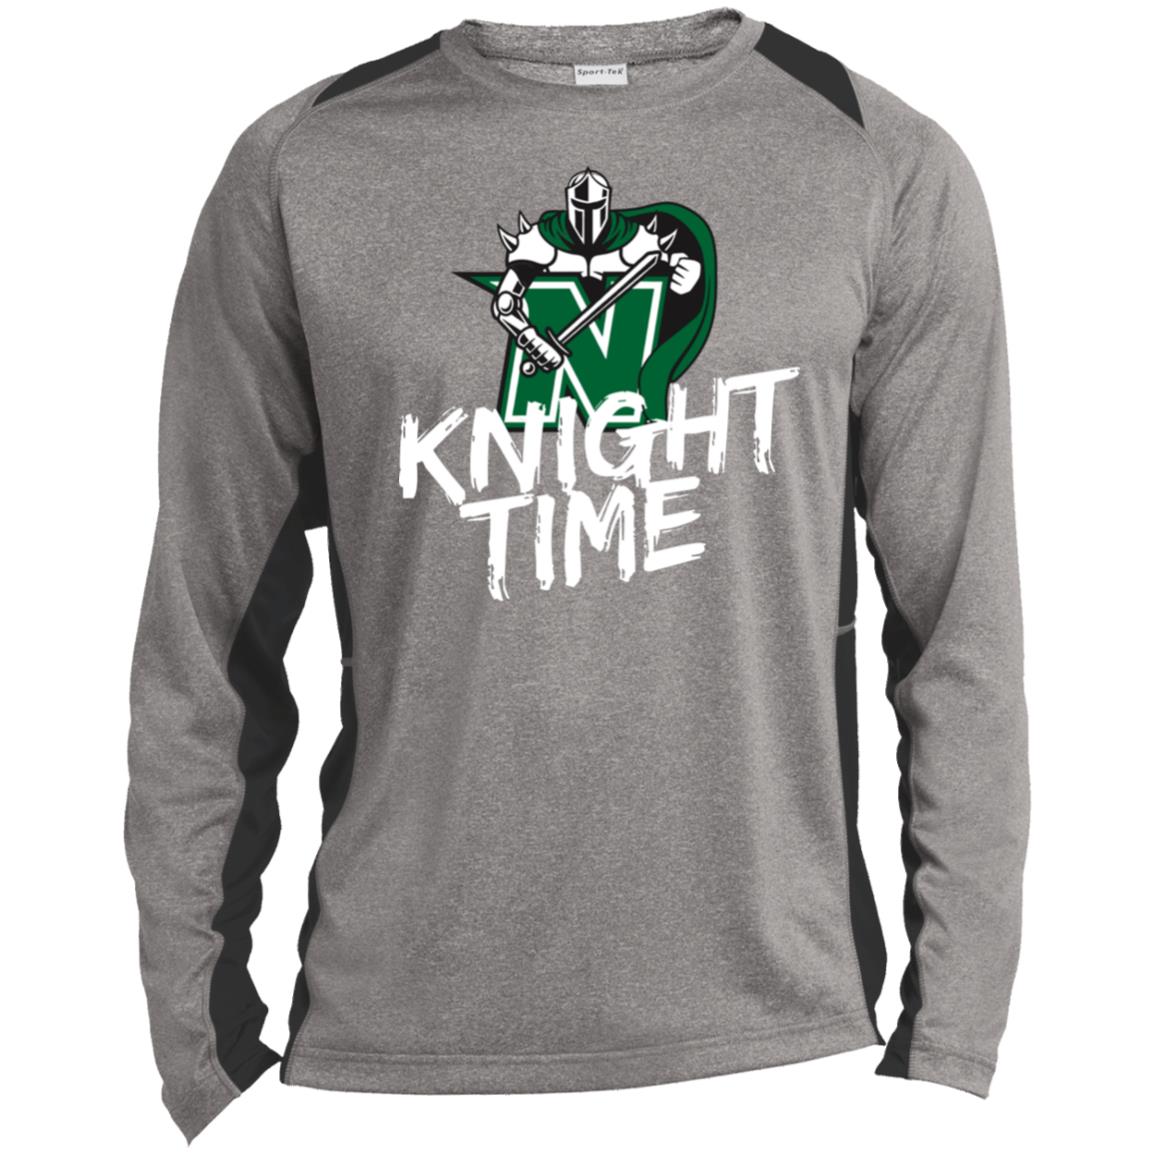 Knight Time Shirt 